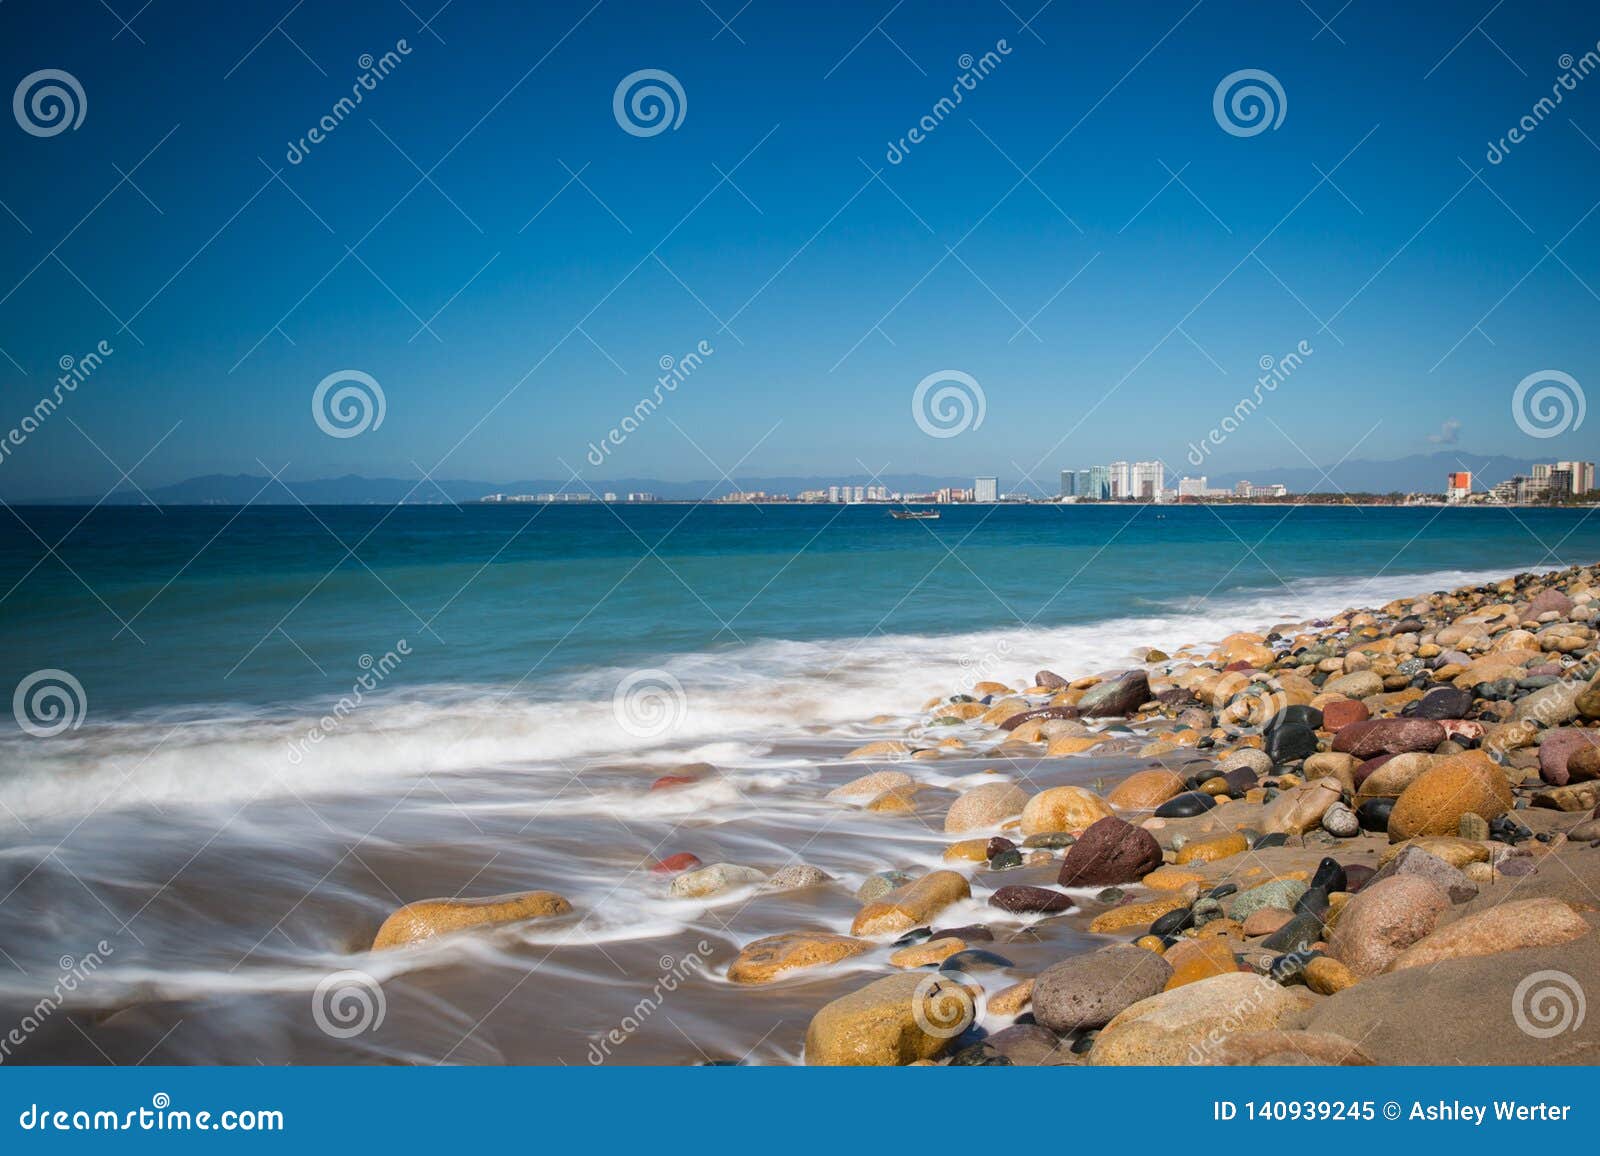 wave and beach in centro puerto vallarta